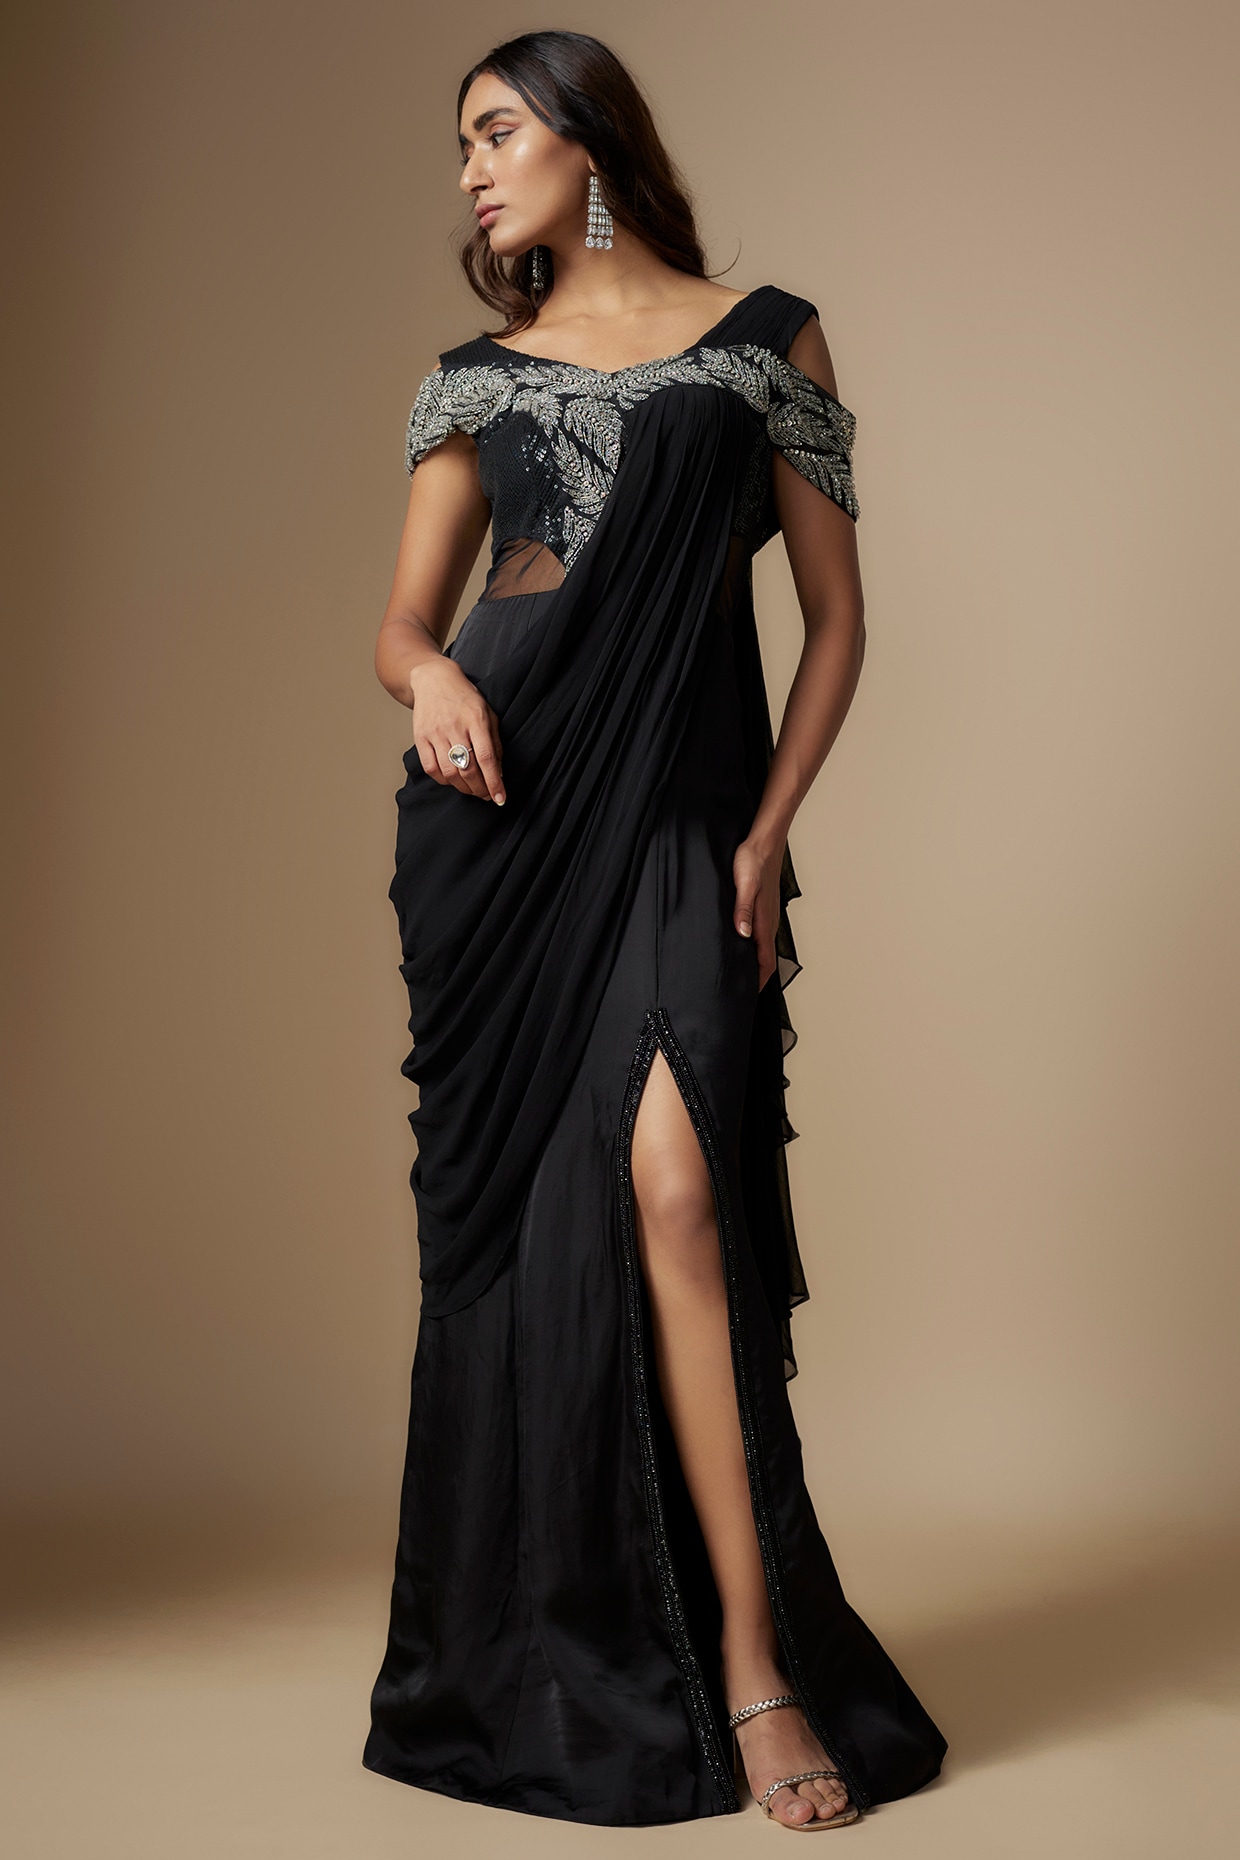 Saree Hack: How to Drape Saree as Dress | How to Wear Saree for Beginners |  Tia Bhuva - YouTube